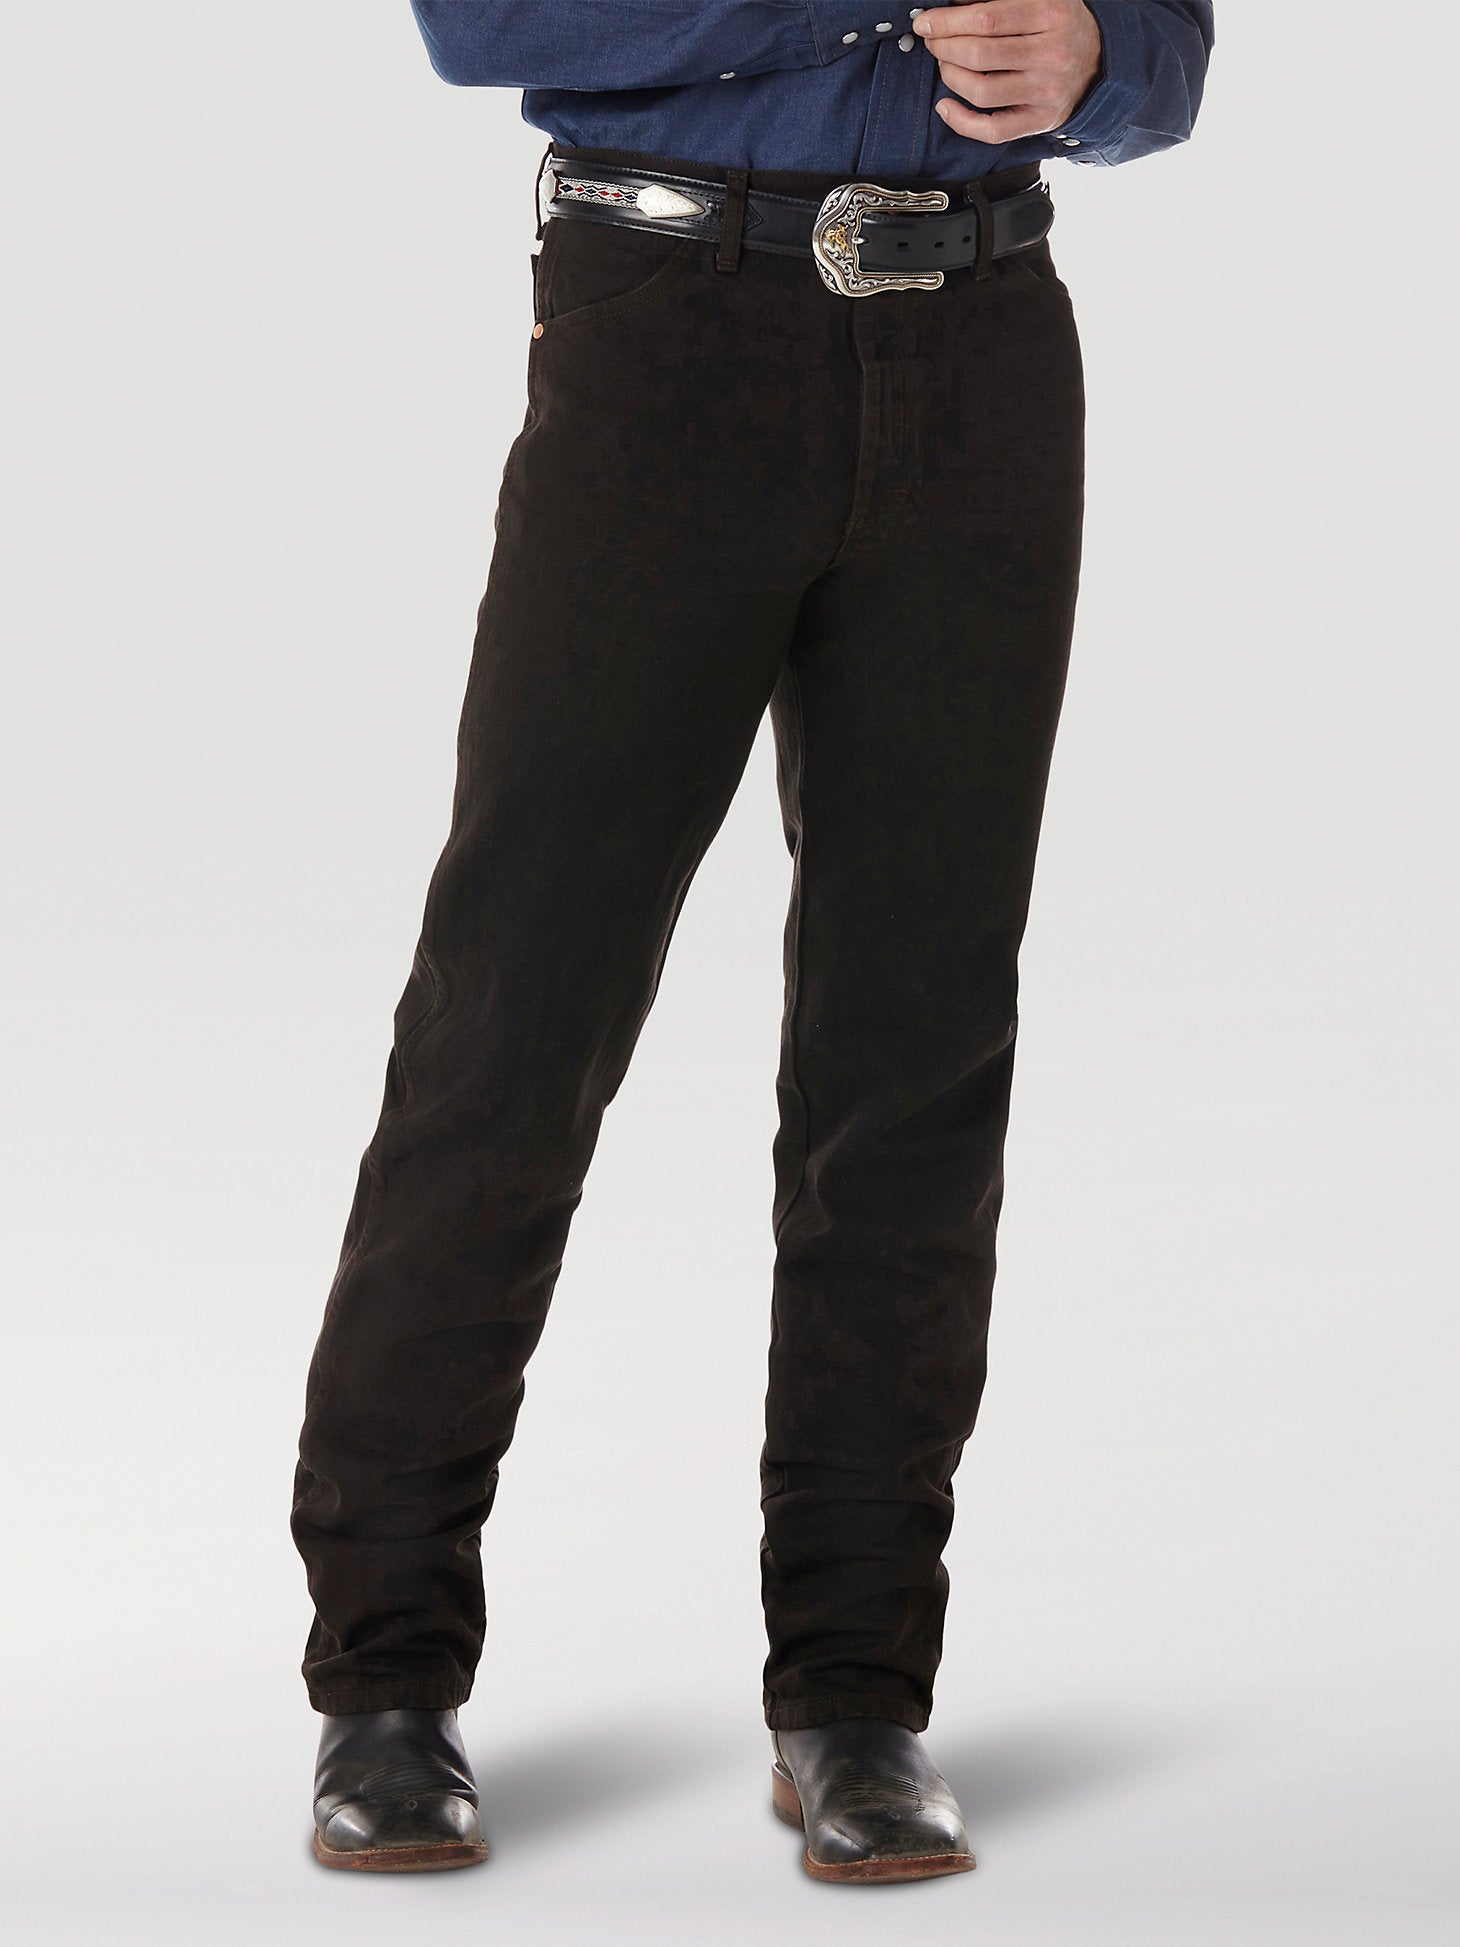 Black Wrangler Cowboy Cut Slim Fit Jeans